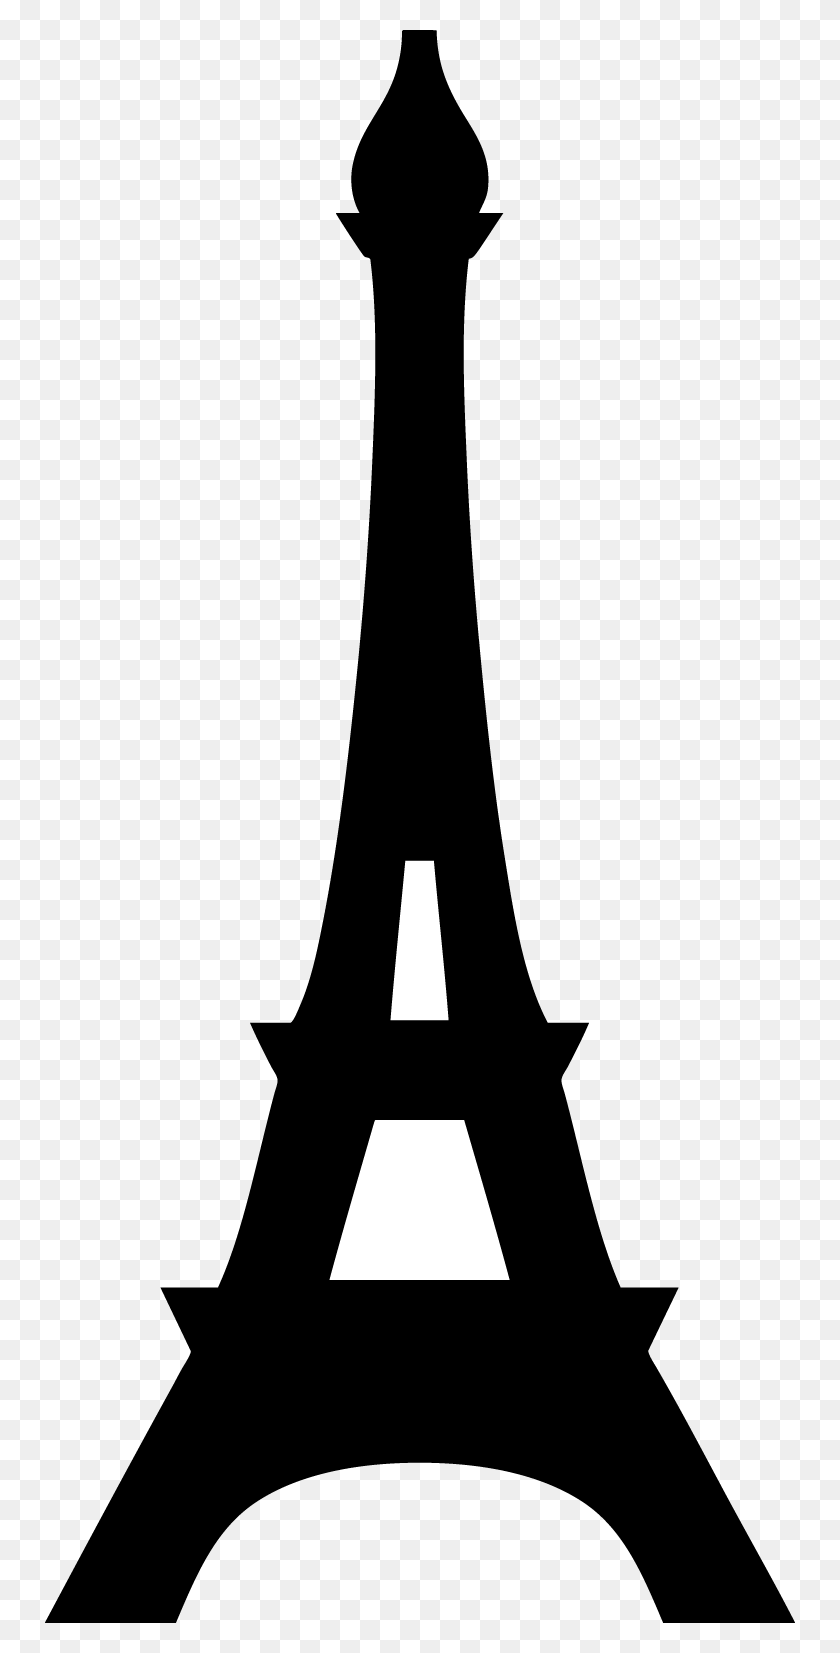 750x1593 Top Things To Do In Paris - Paris Eiffel Tower Clipart